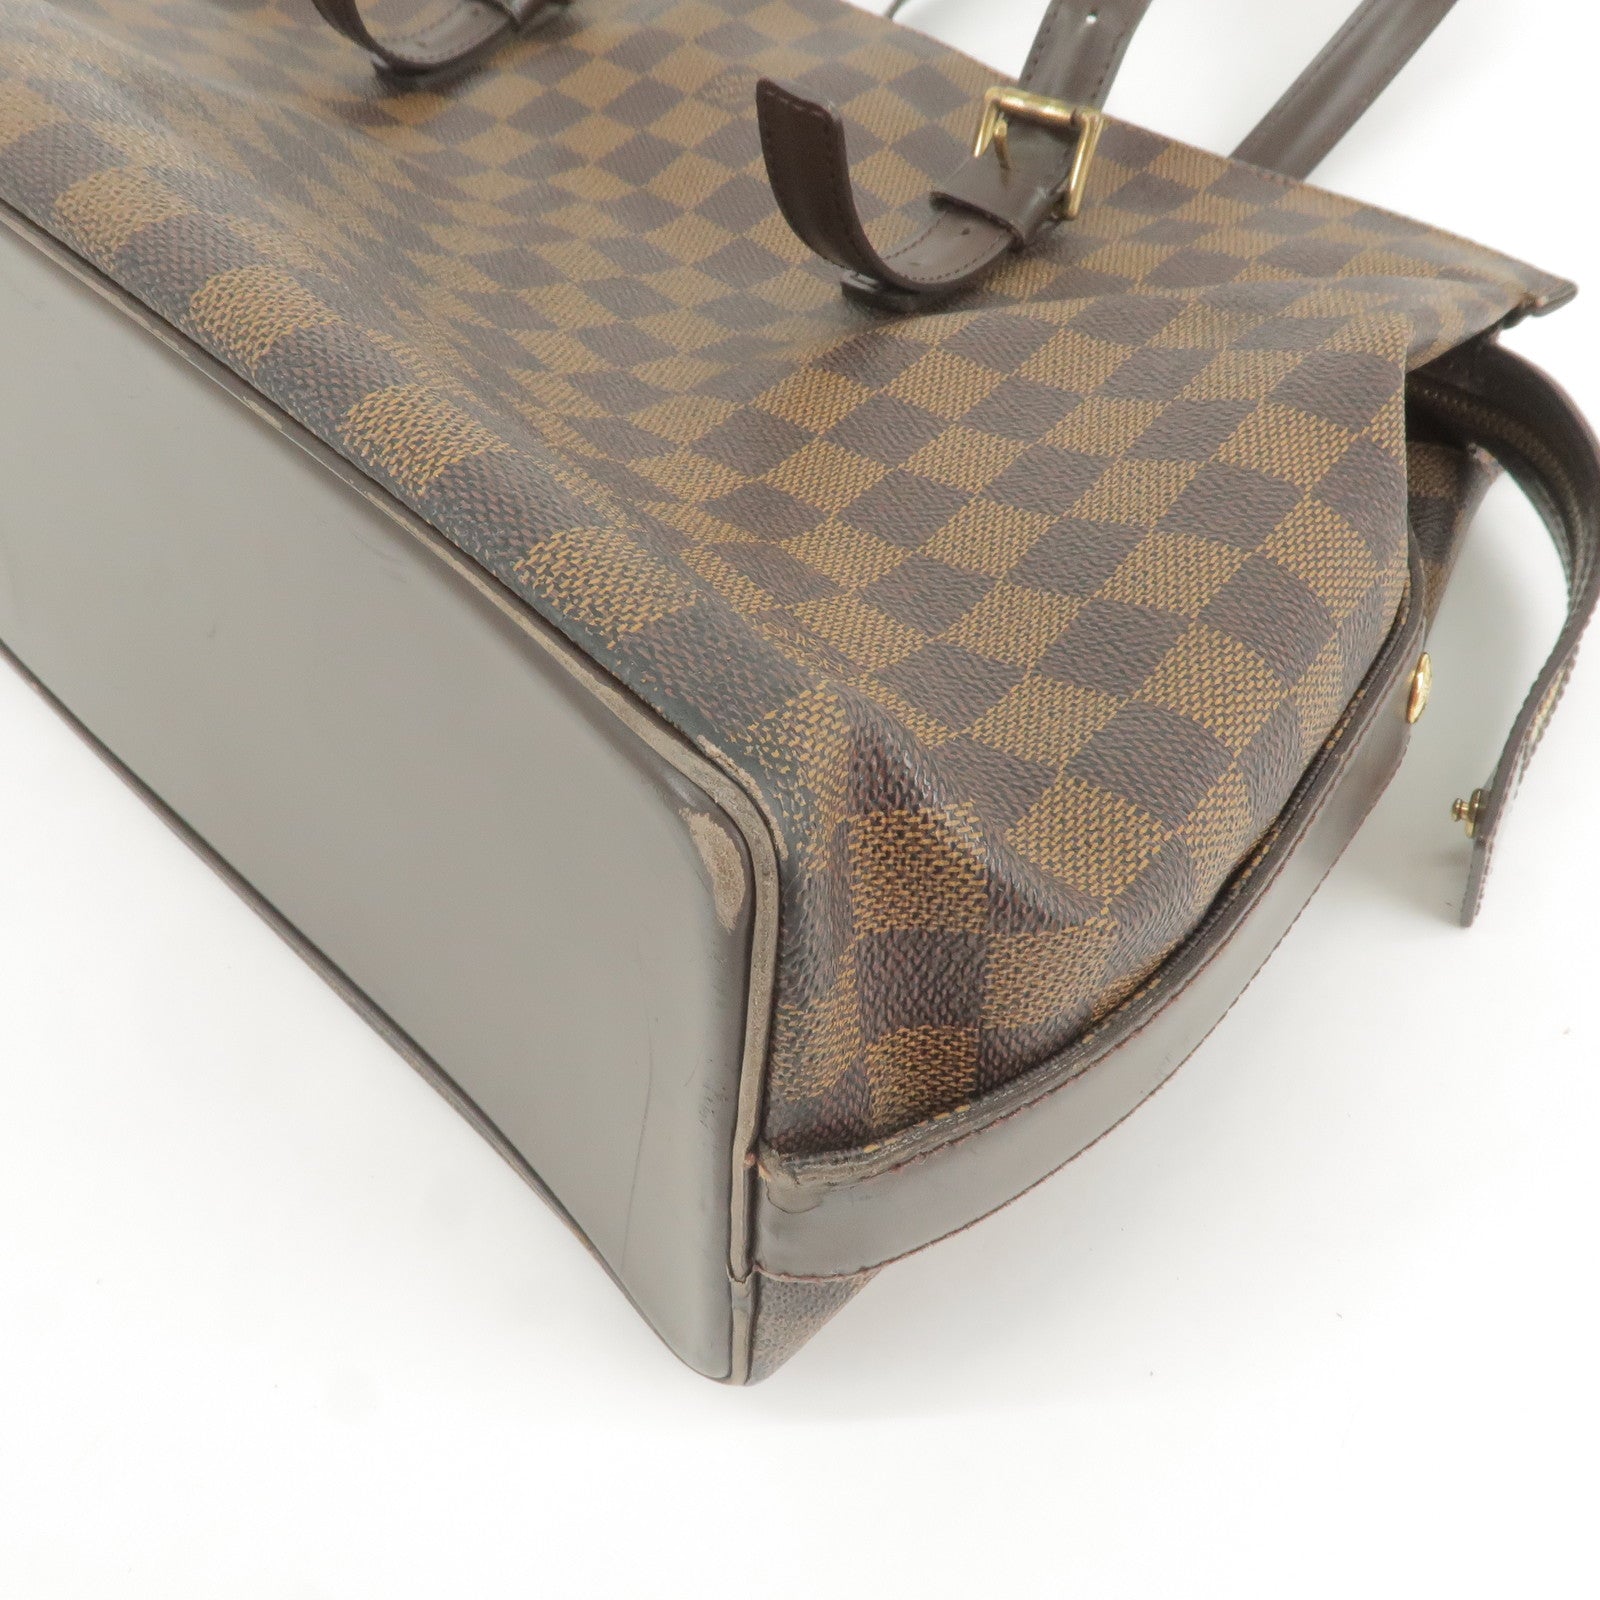 Louis-Vuitton-Damier-Chelsea-Tote-Bag-Shoulder-Bag-N51119 – dct